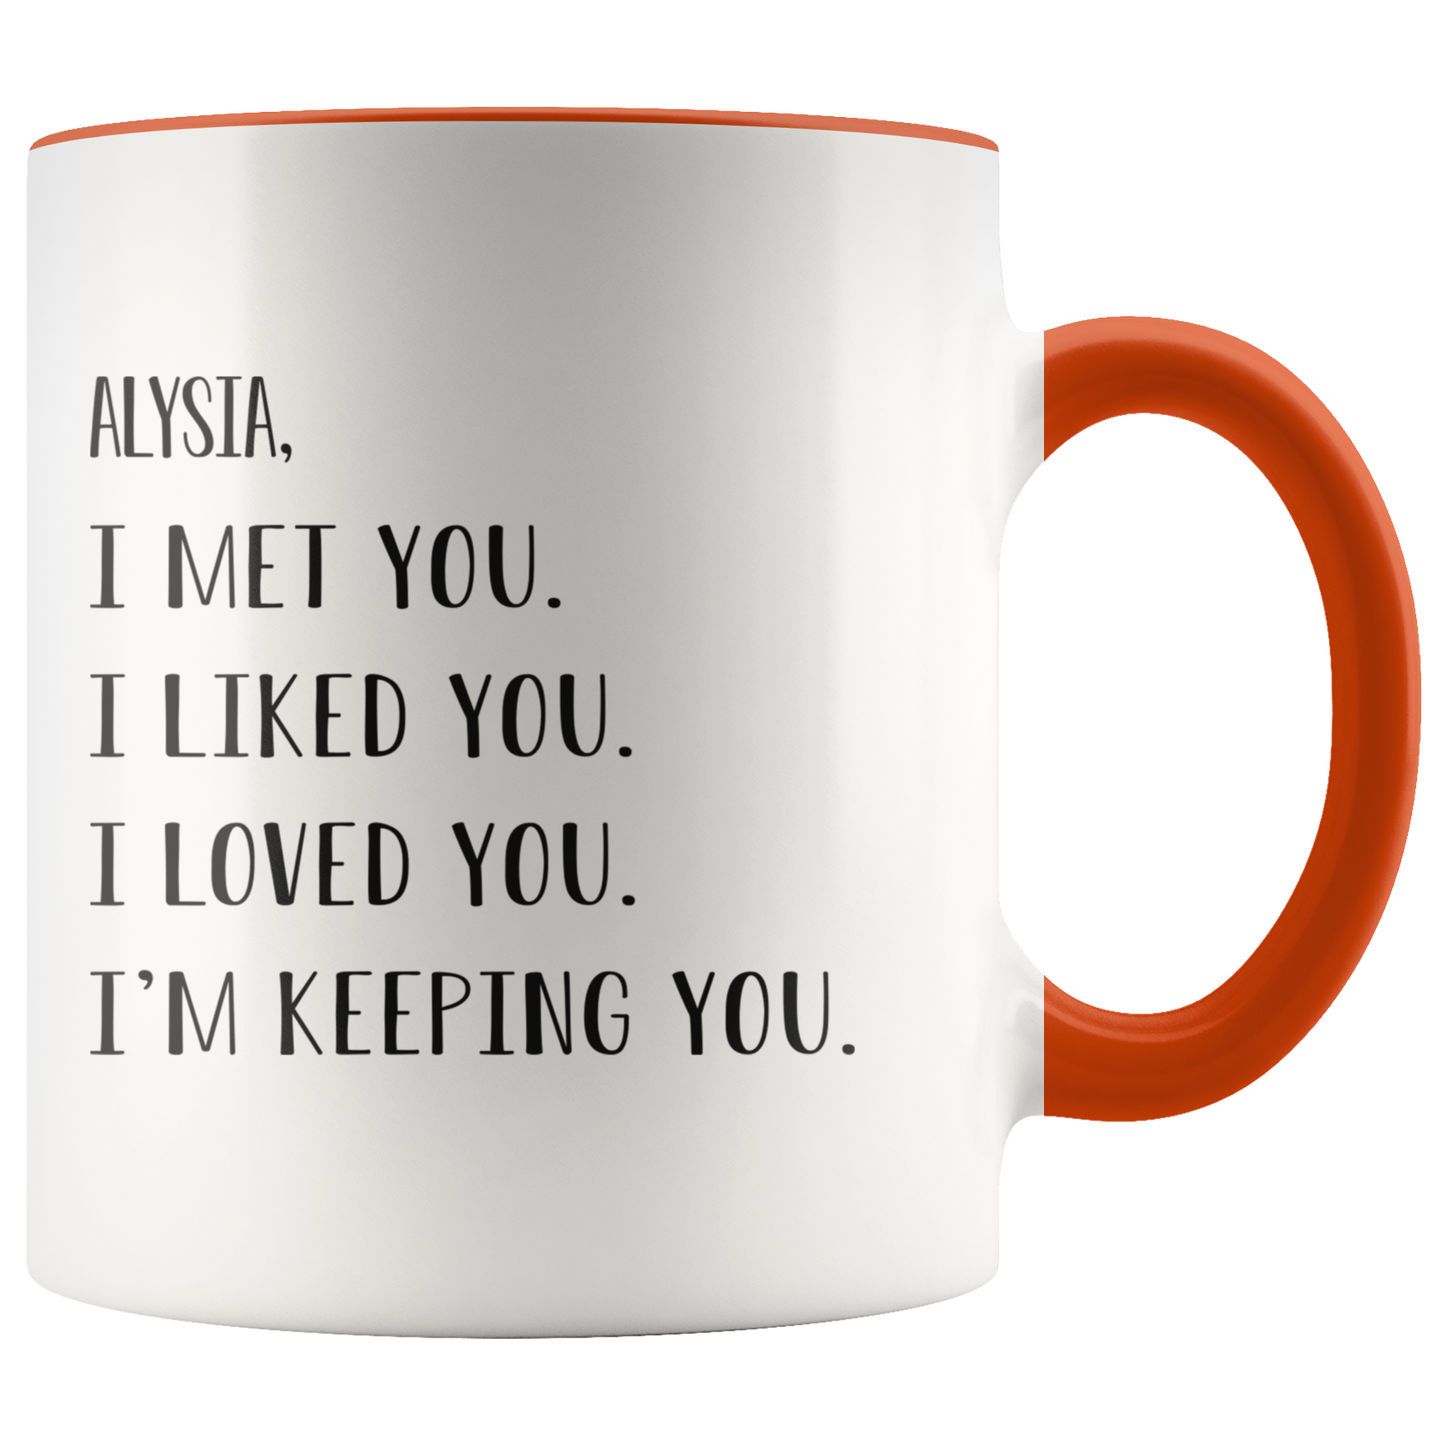 MUG01221292402-sp-22999 - Valentine Day Coffee Mug For Alysia - I Met You, I Like You,